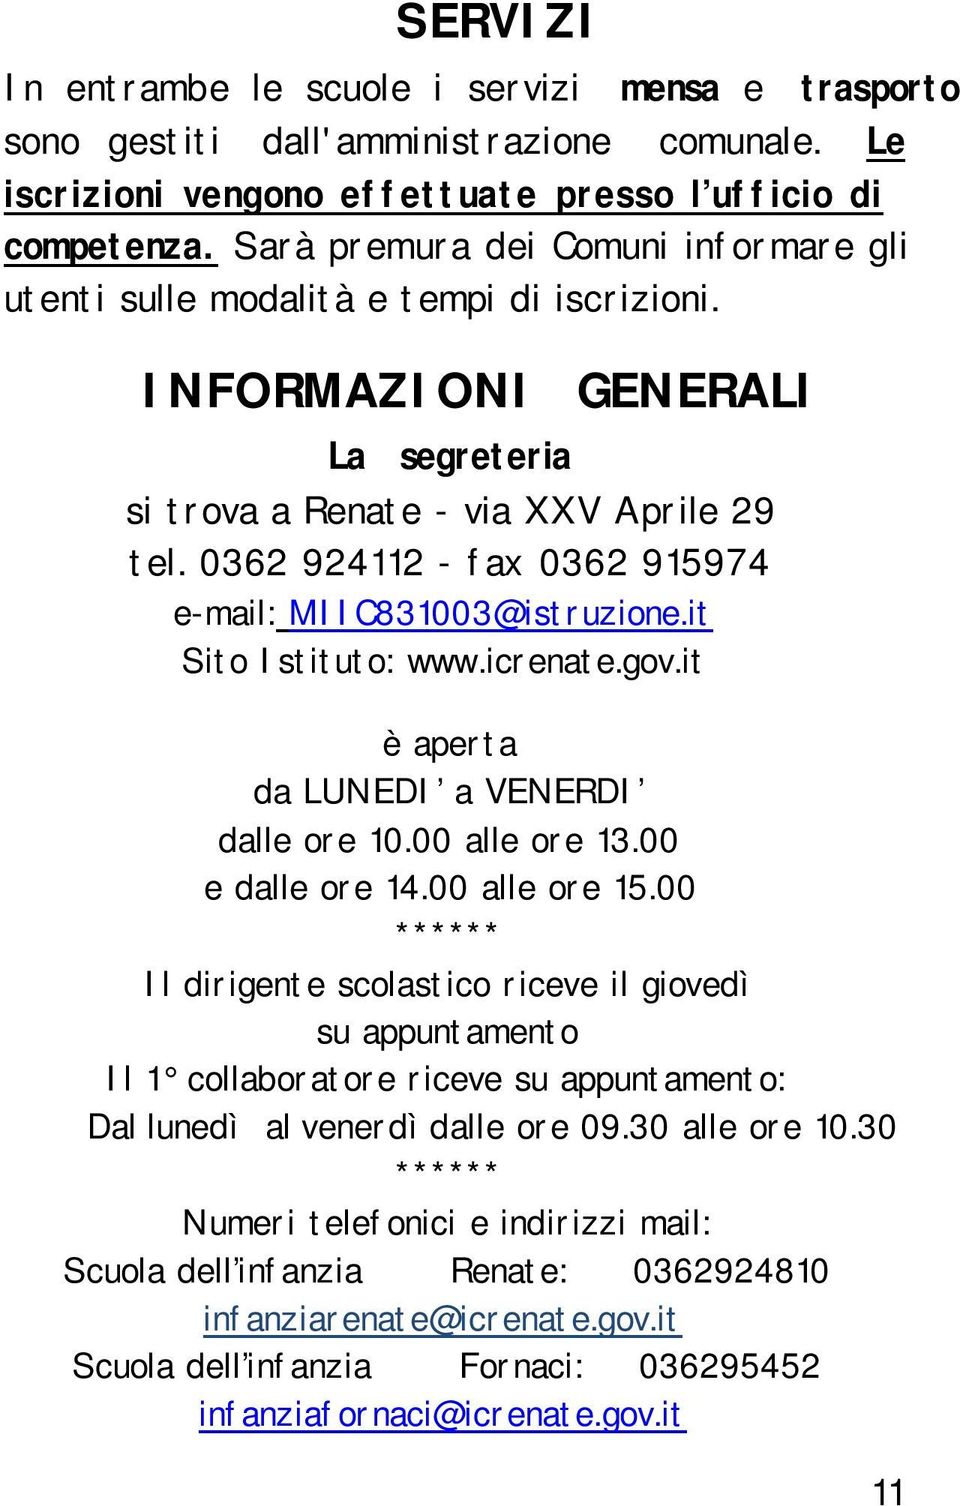 0362 924112 - fax 0362 915974 e-mail: MIIC831003@istruzione.it Sito Istituto: www.icrenate.gov.it è aperta da LUNEDI a VENERDI dalle ore 10.00 alle ore 13.00 e dalle ore 14.00 alle ore 15.